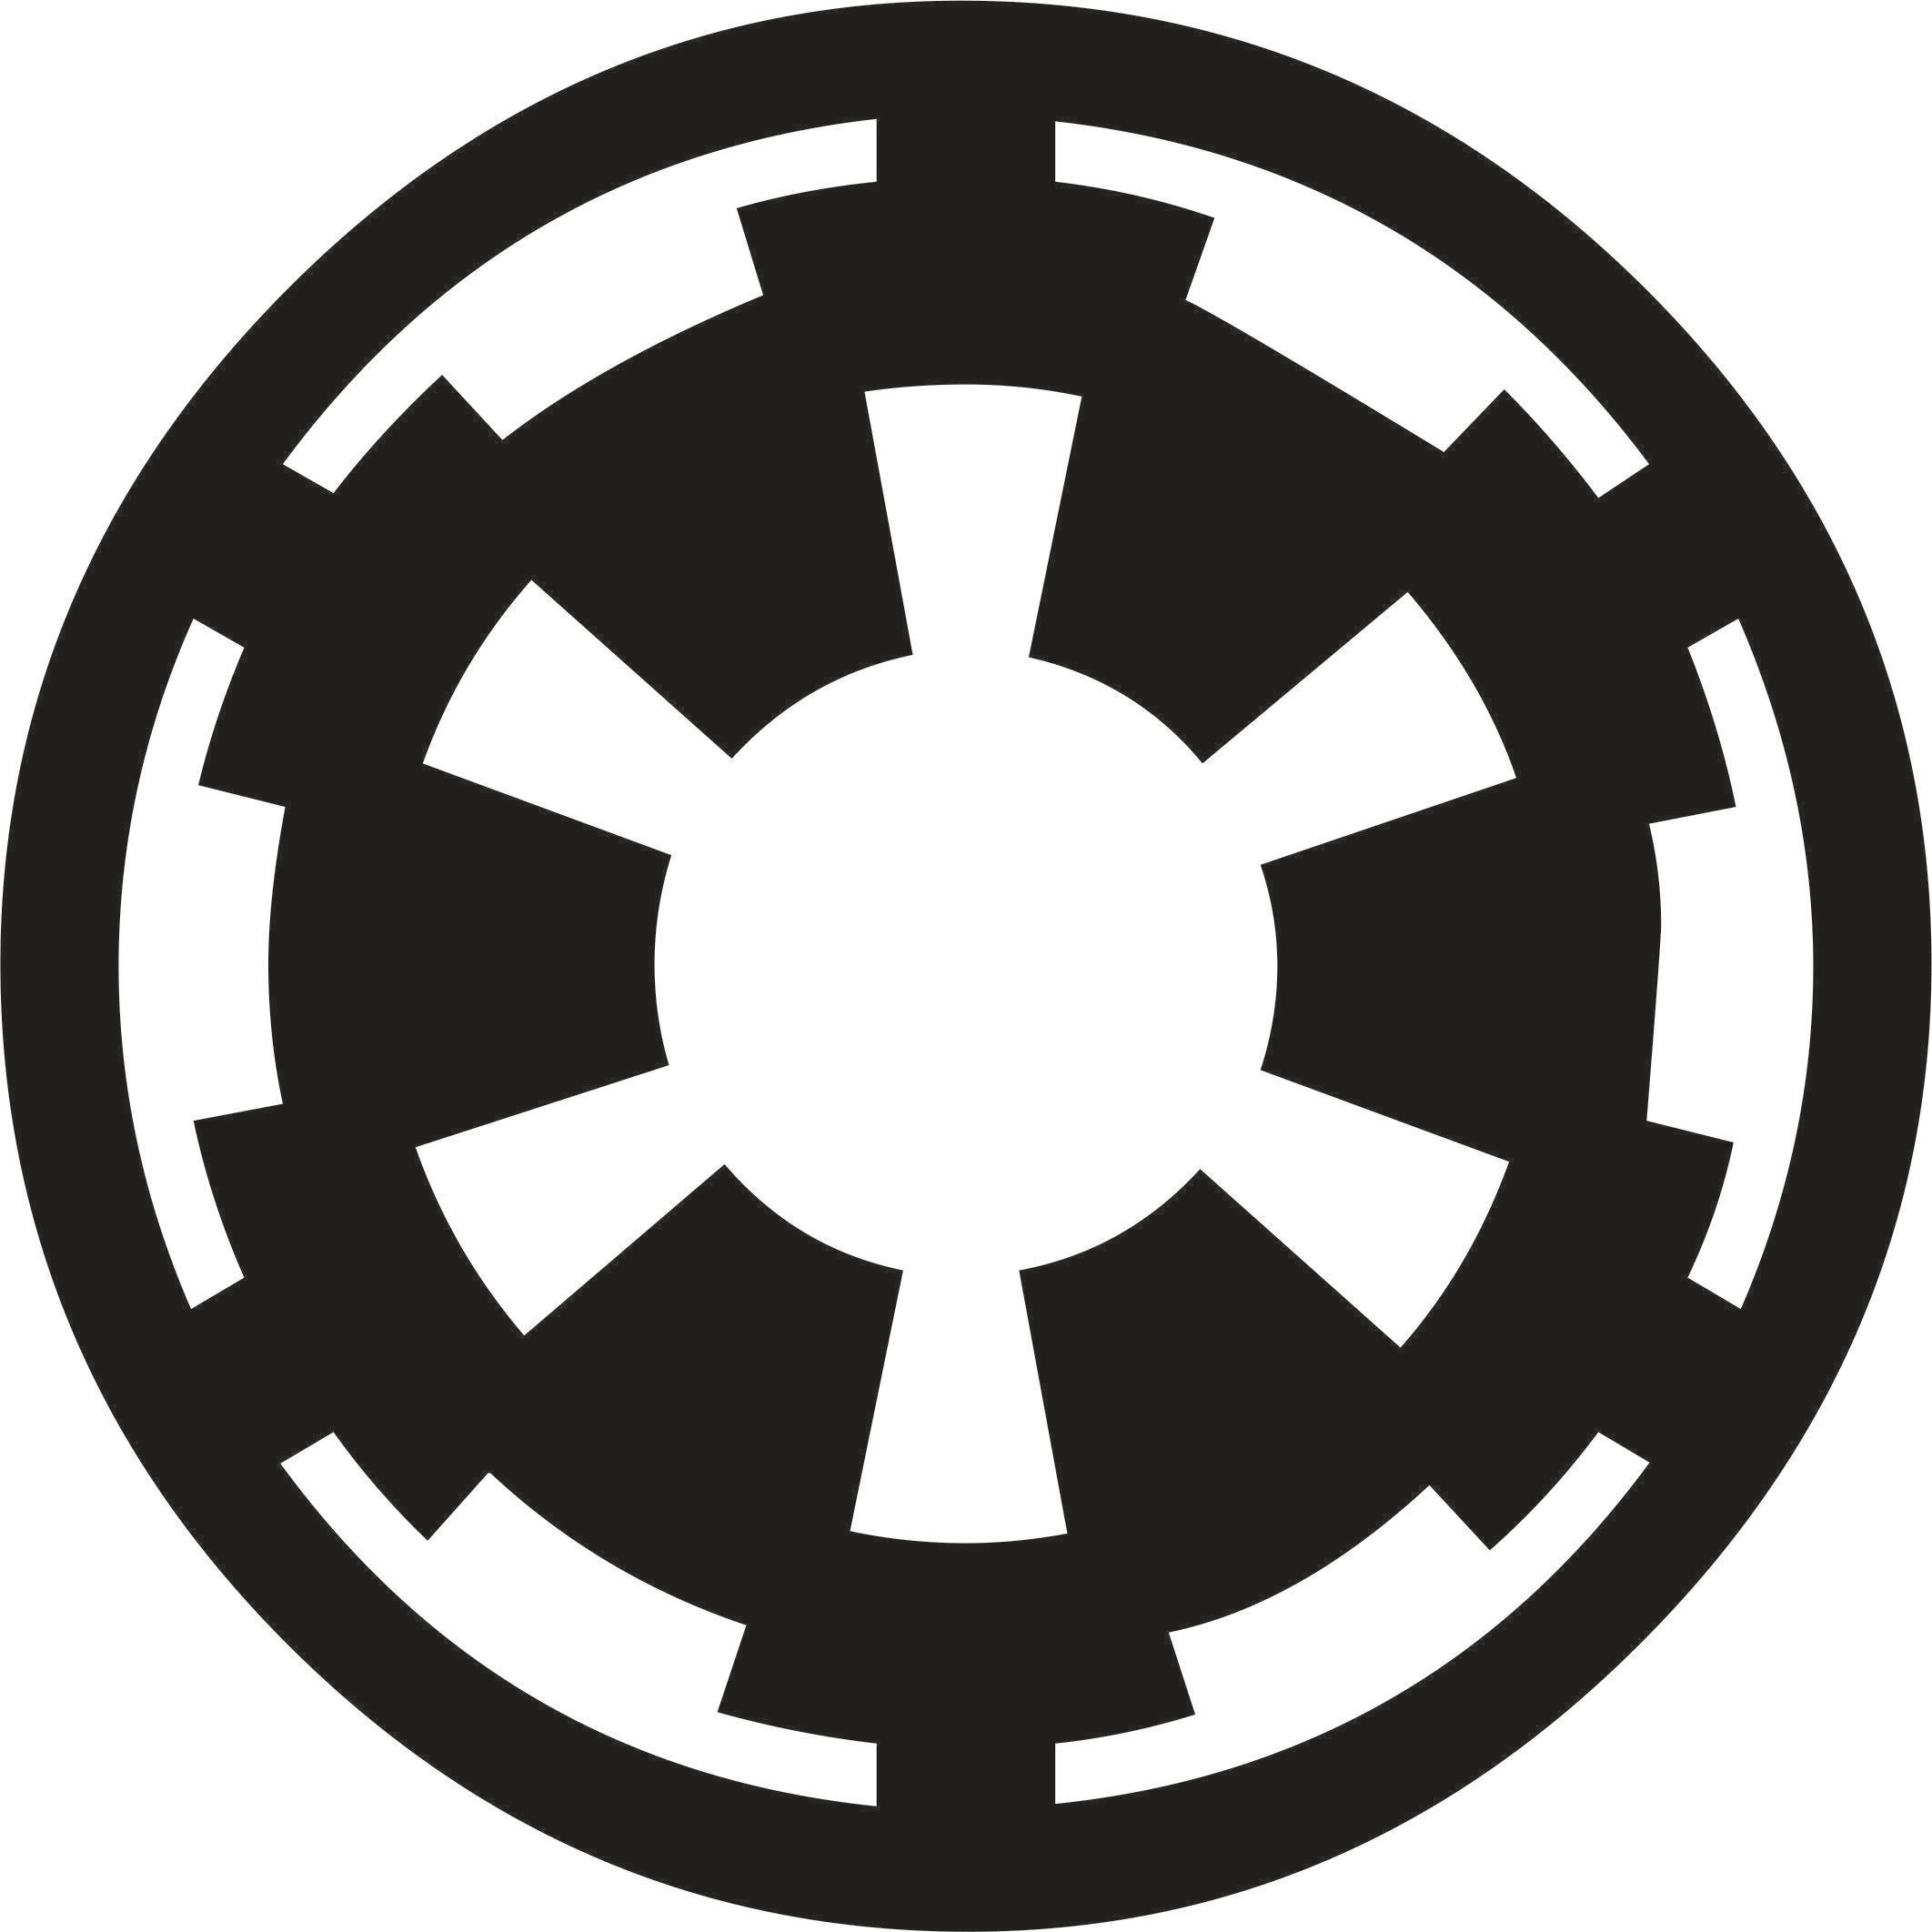 Imperail Logo - Star wars imperial Logos